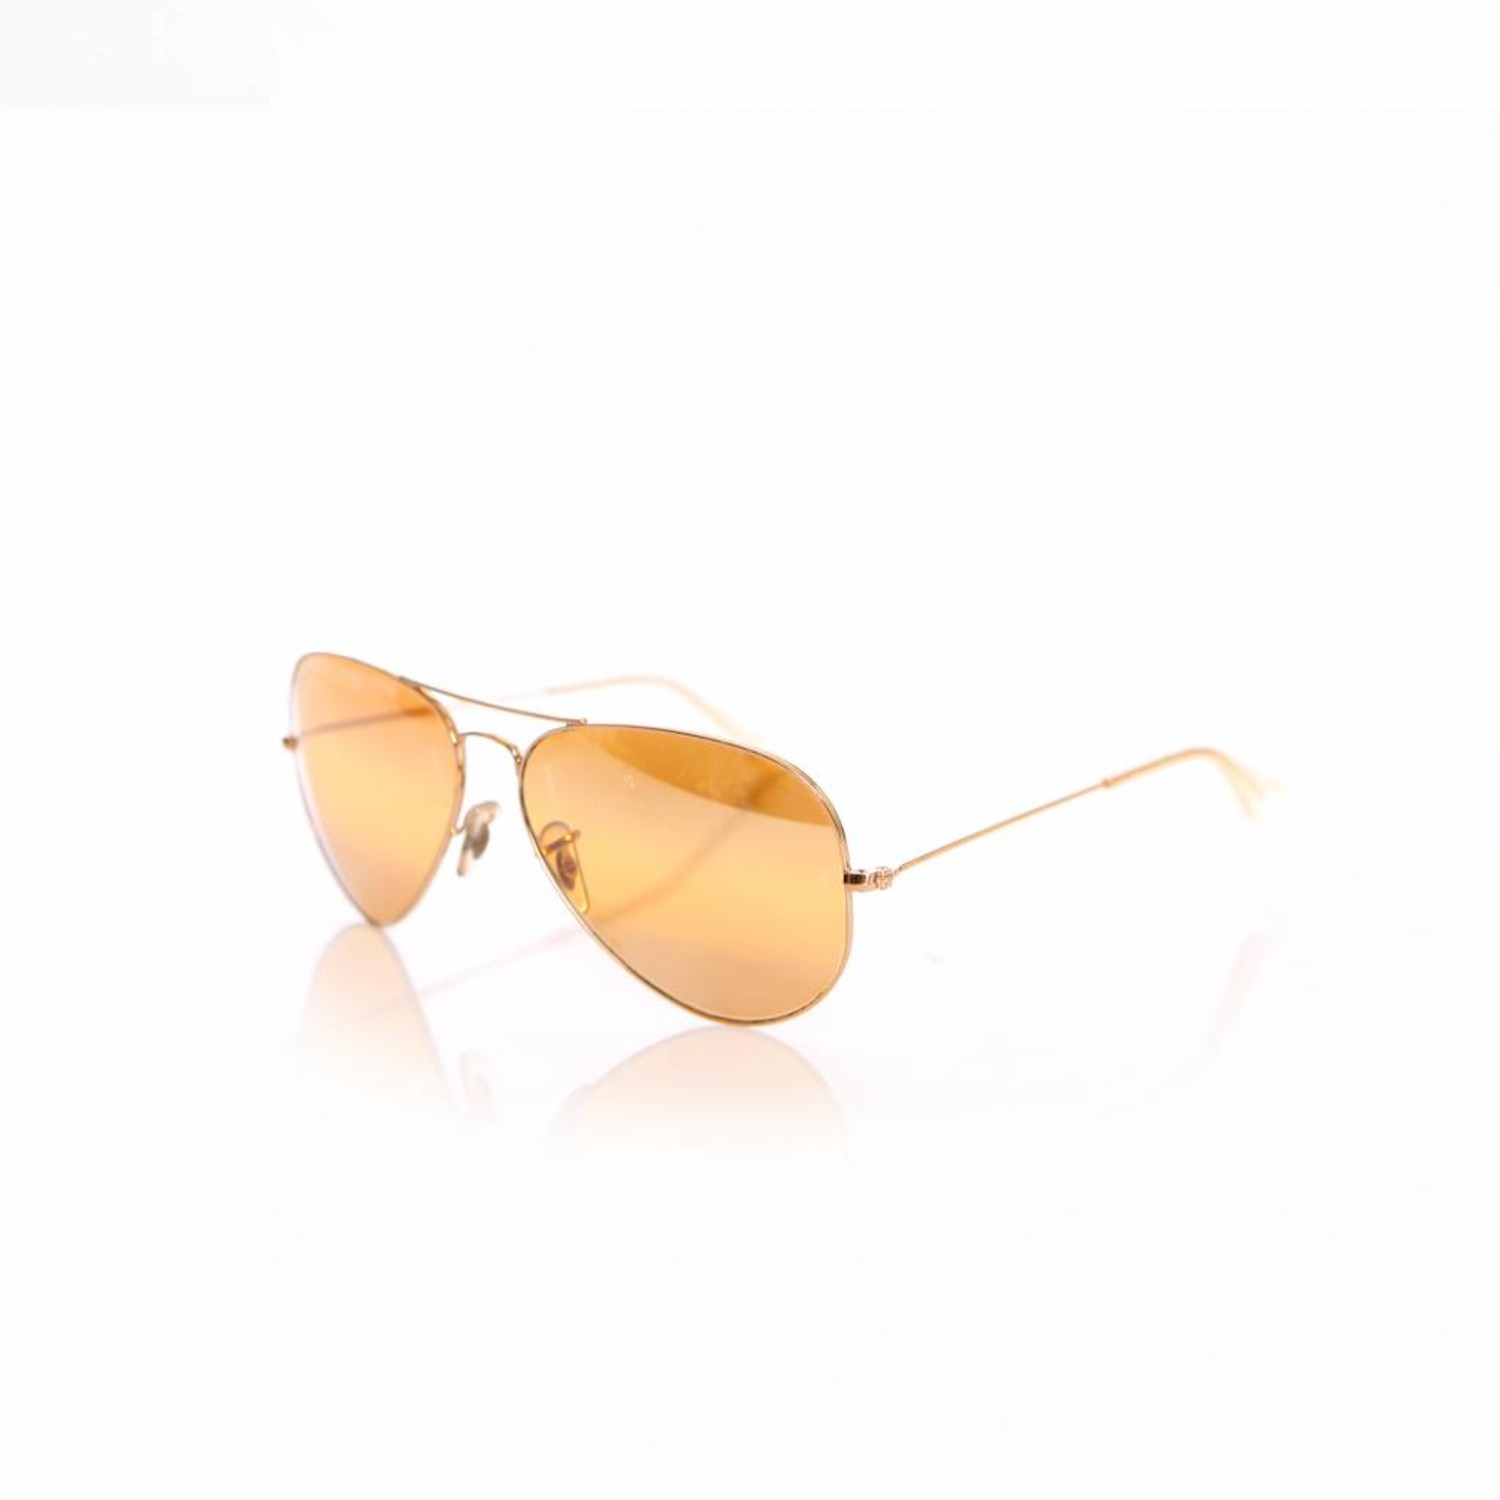 Ray Ban, Gold coloured Aviator glasses. - Unique Designer Pieces